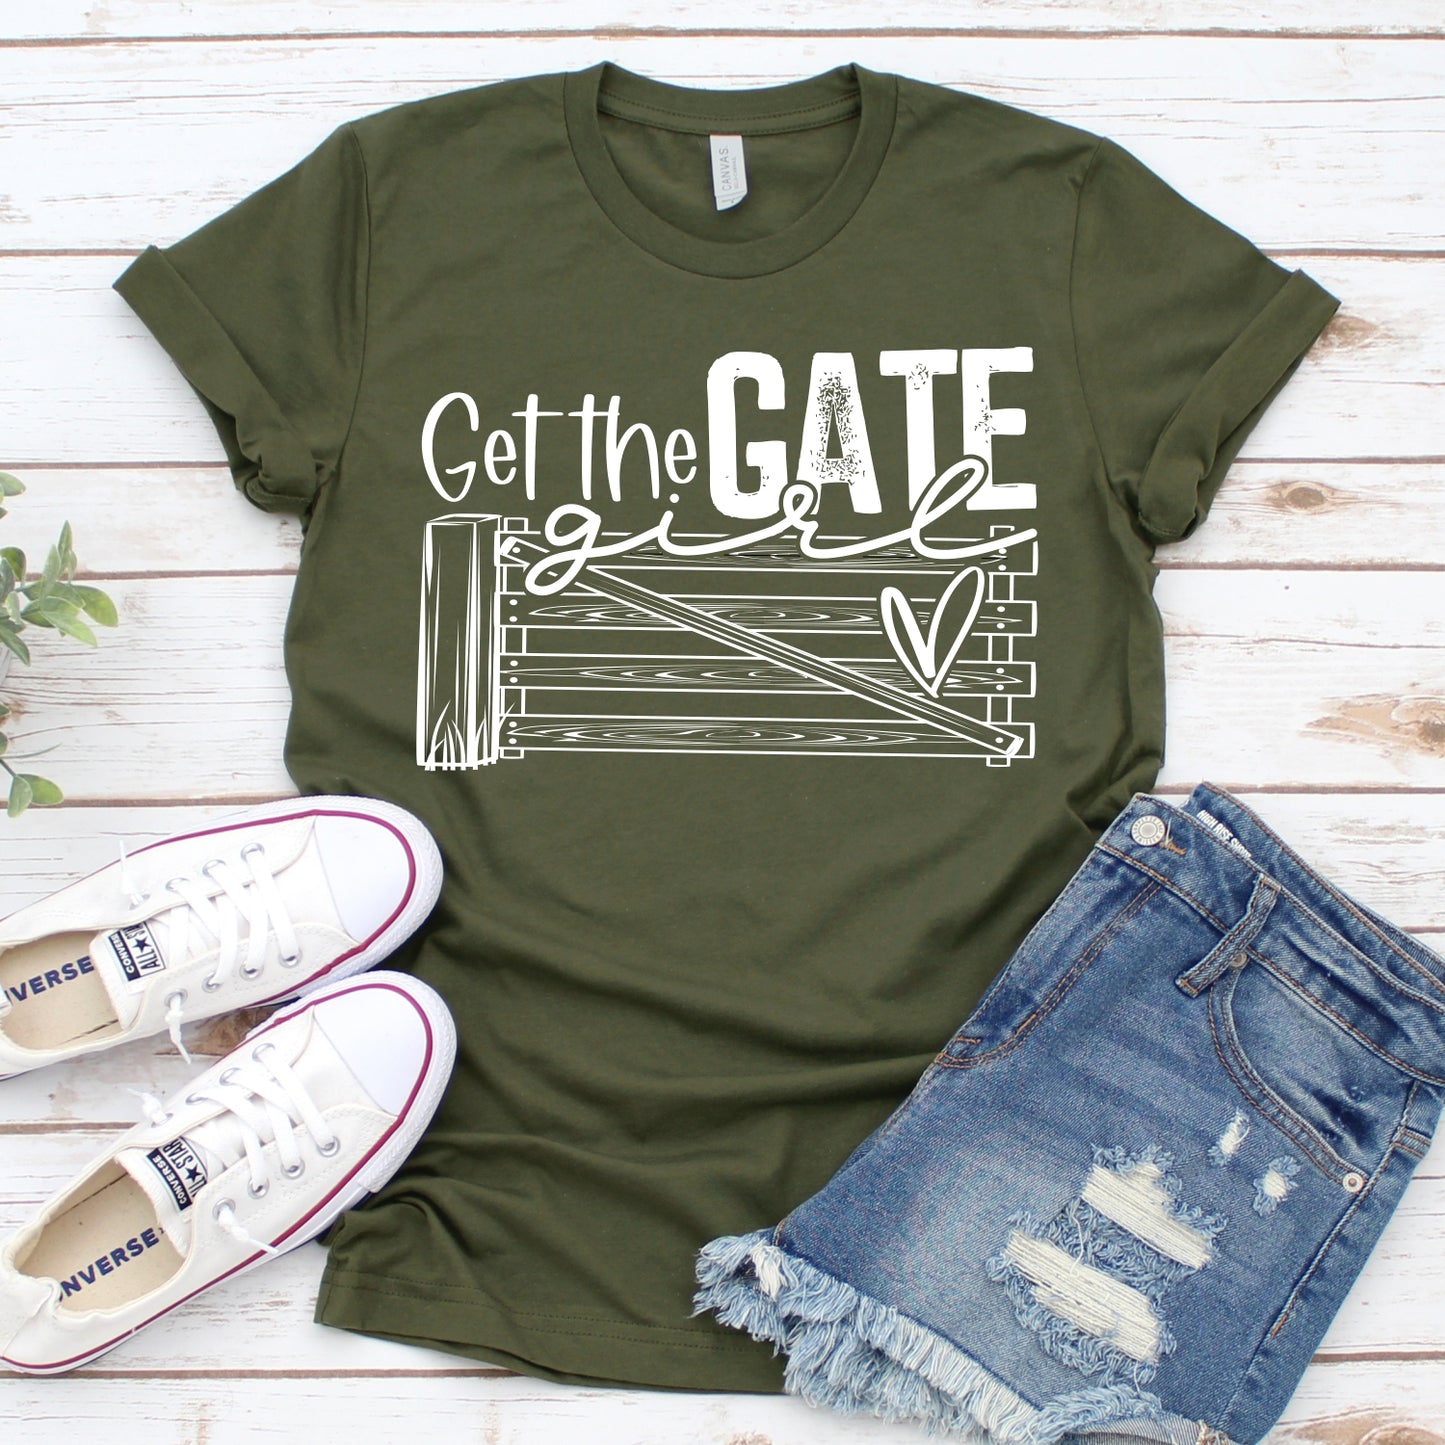 Get the gate kinda girl | Farm | Country